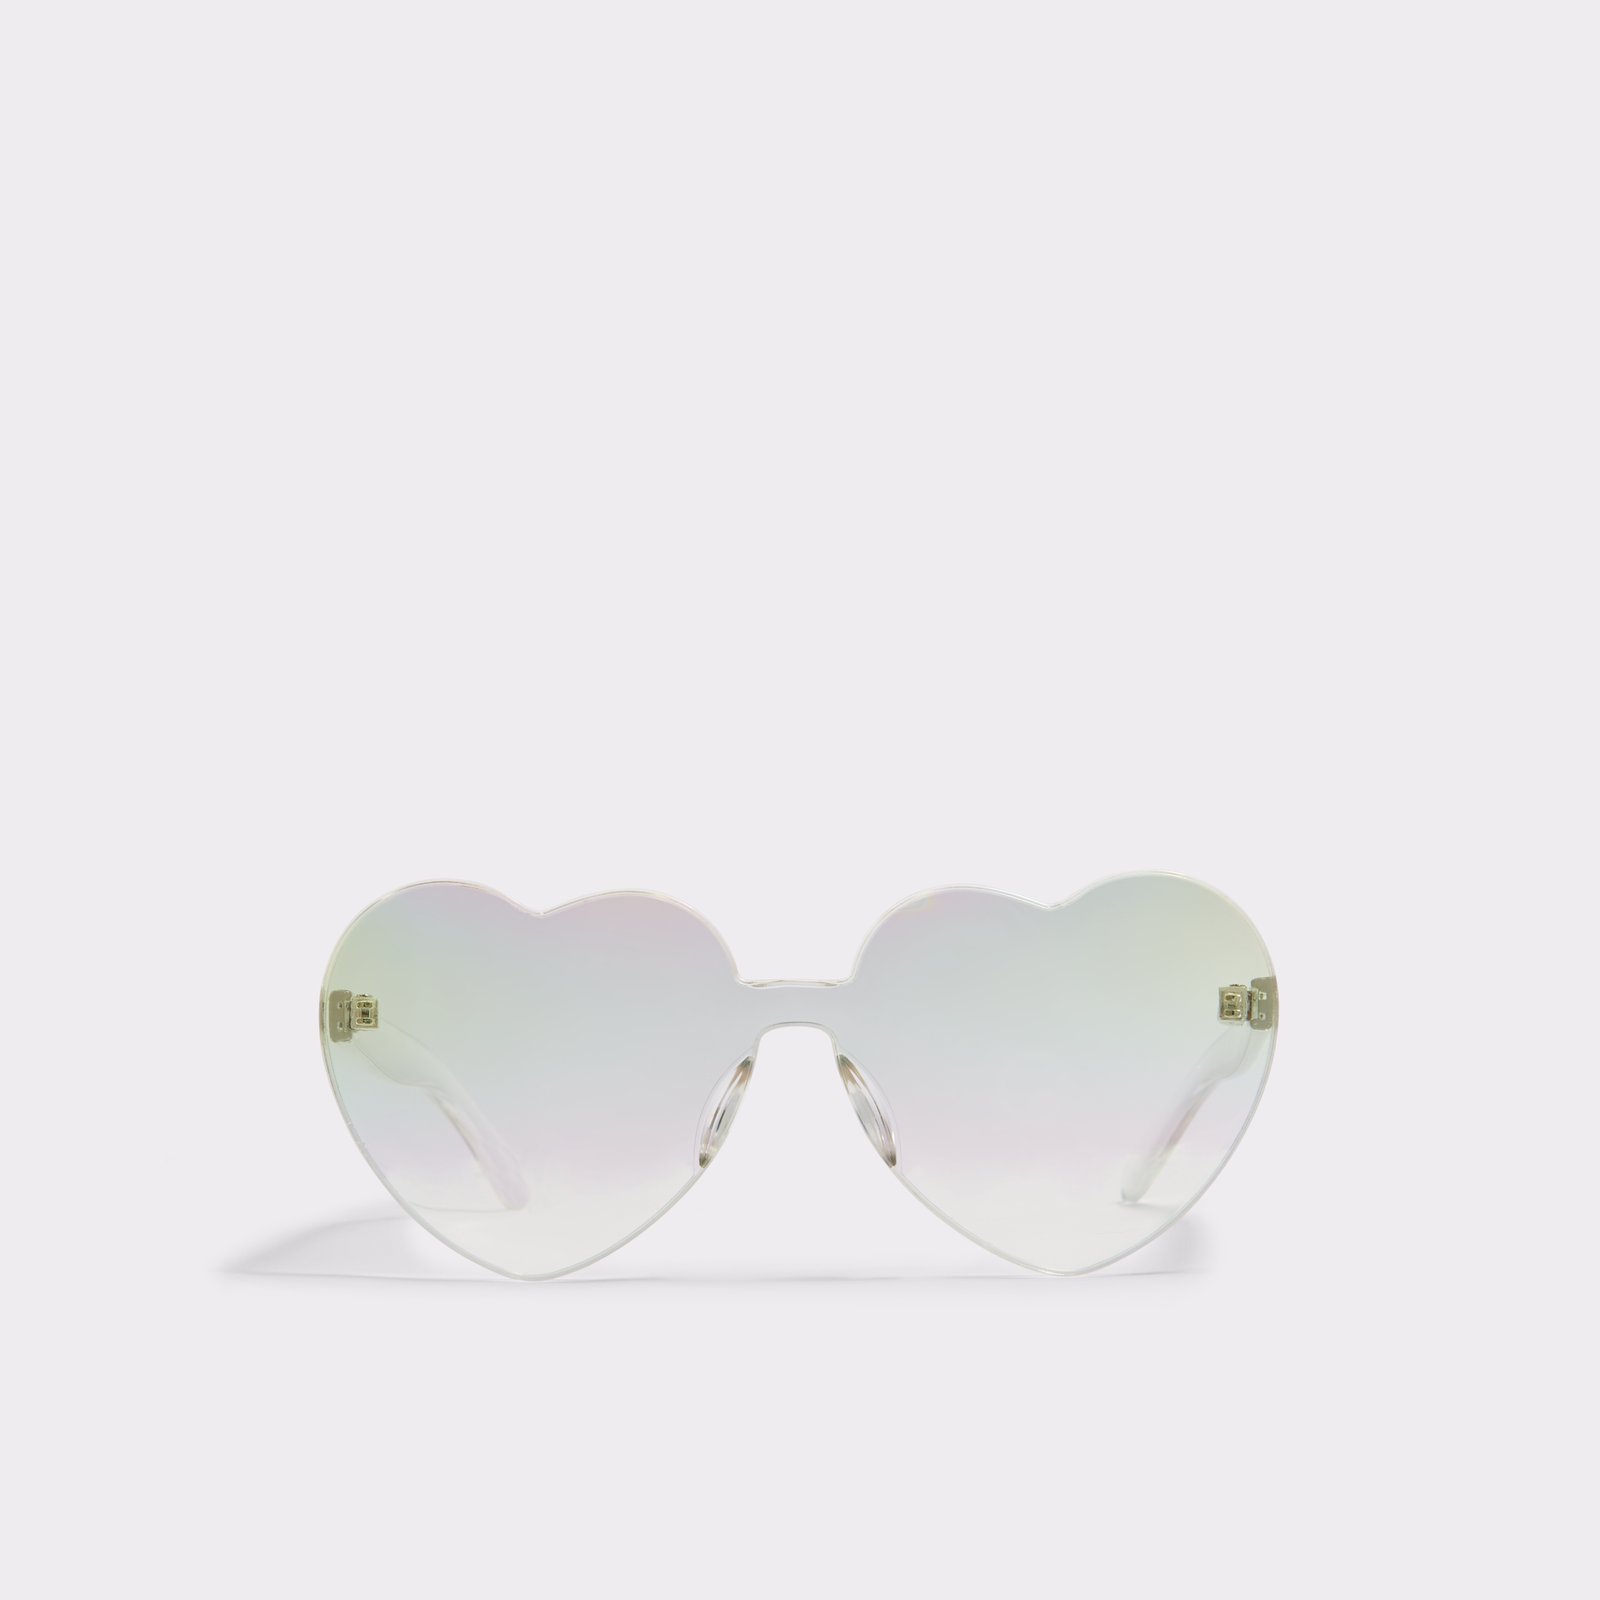 Aldo heart-shaped sunglasses